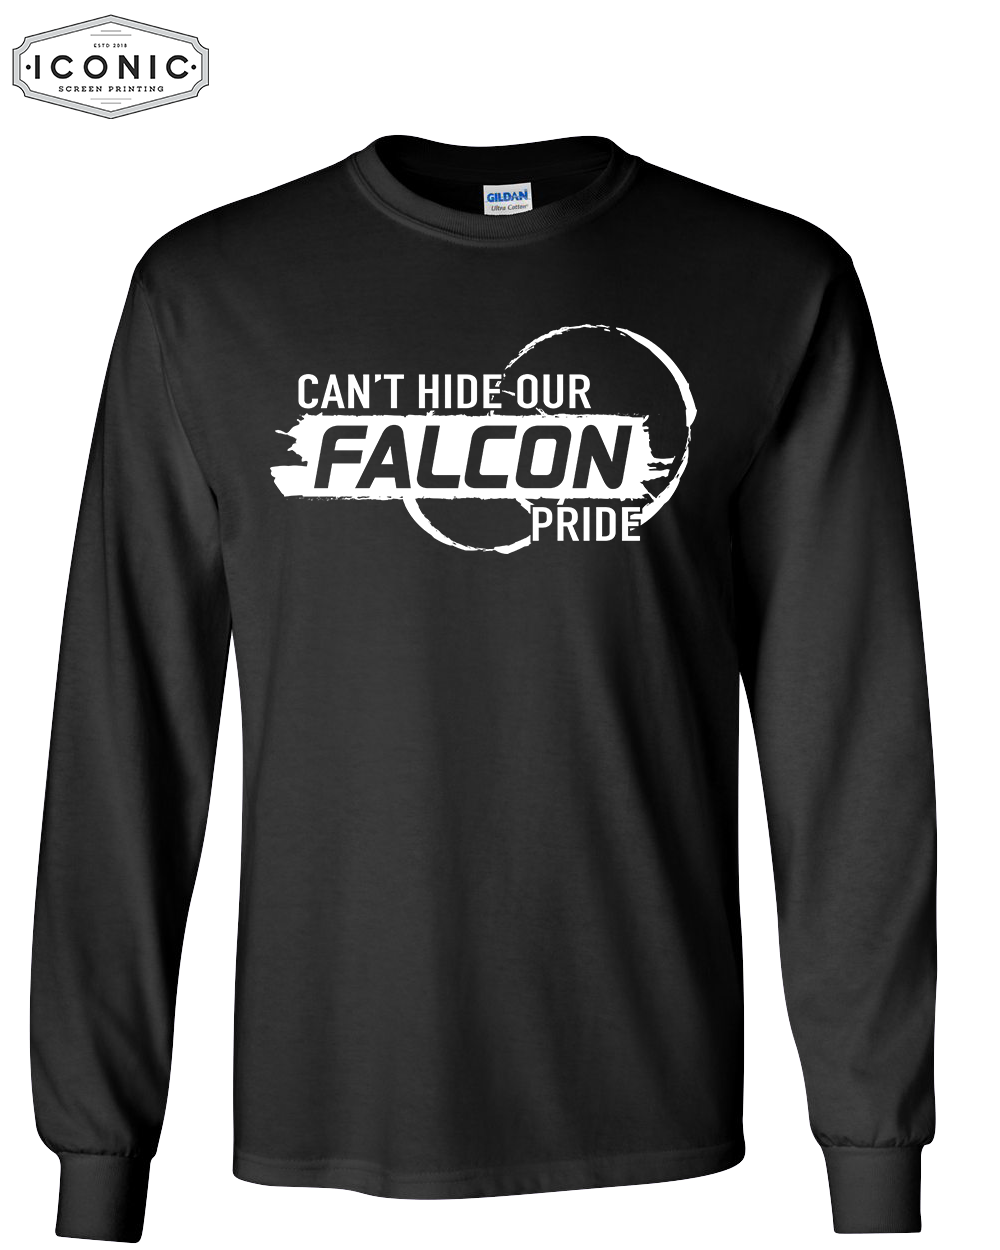 Falcon Pride - Ultra Cotton Long Sleeve